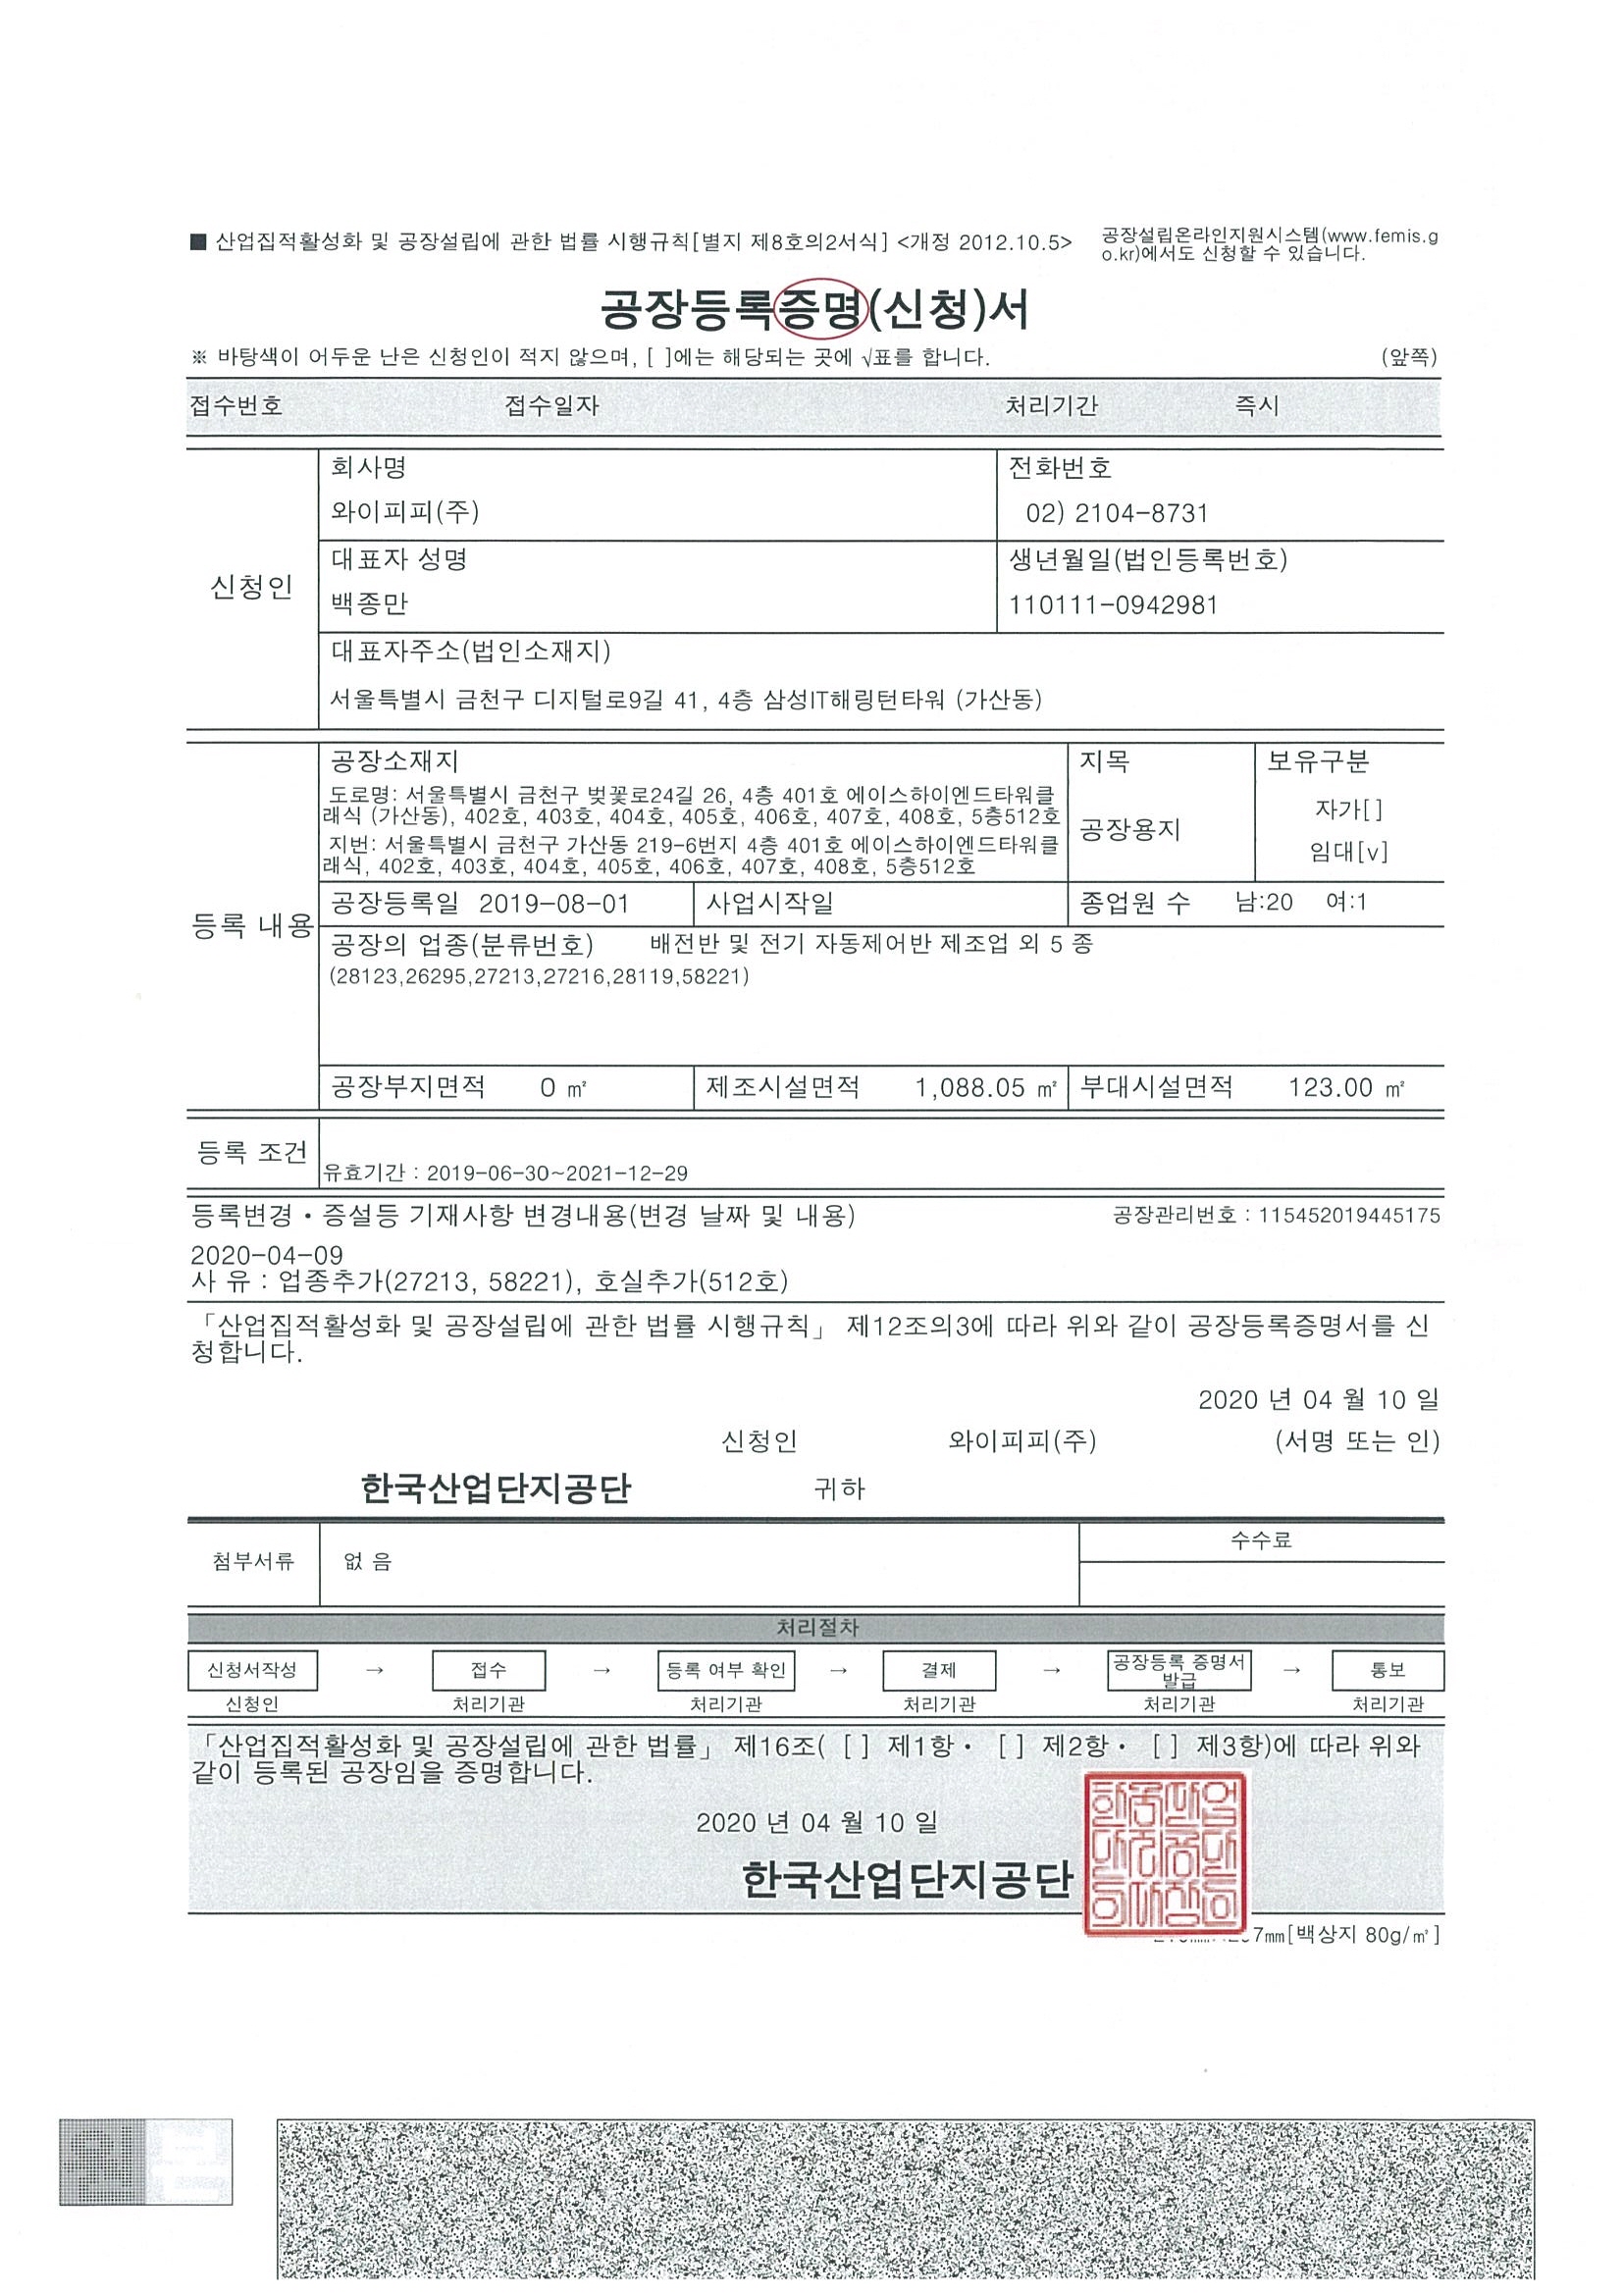 Certificate of factory registration.jpg